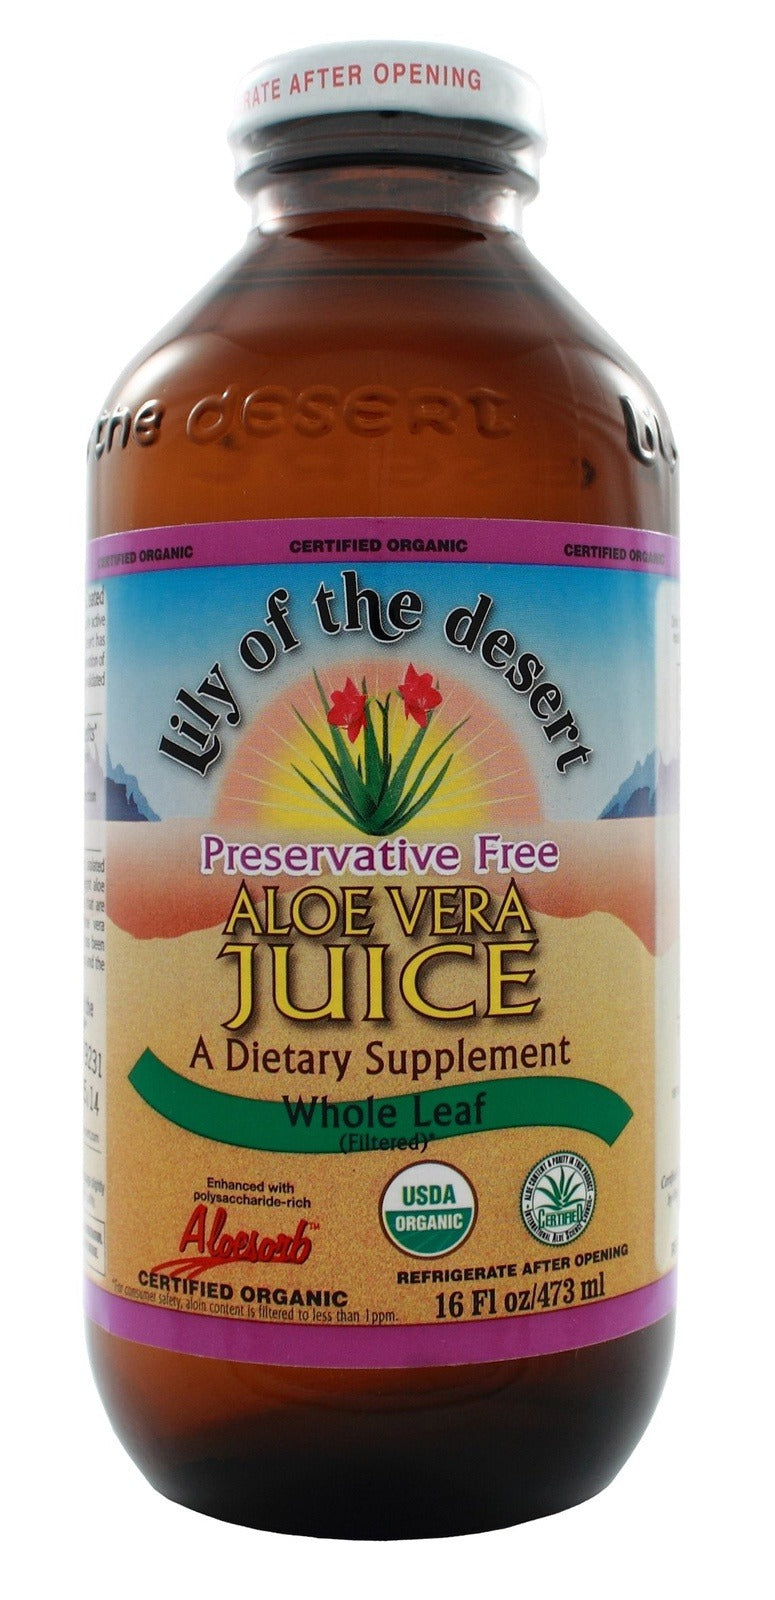 Lily of the Desert Aloe Vera Juice - Whole Leaf Glass Bottle Image 2